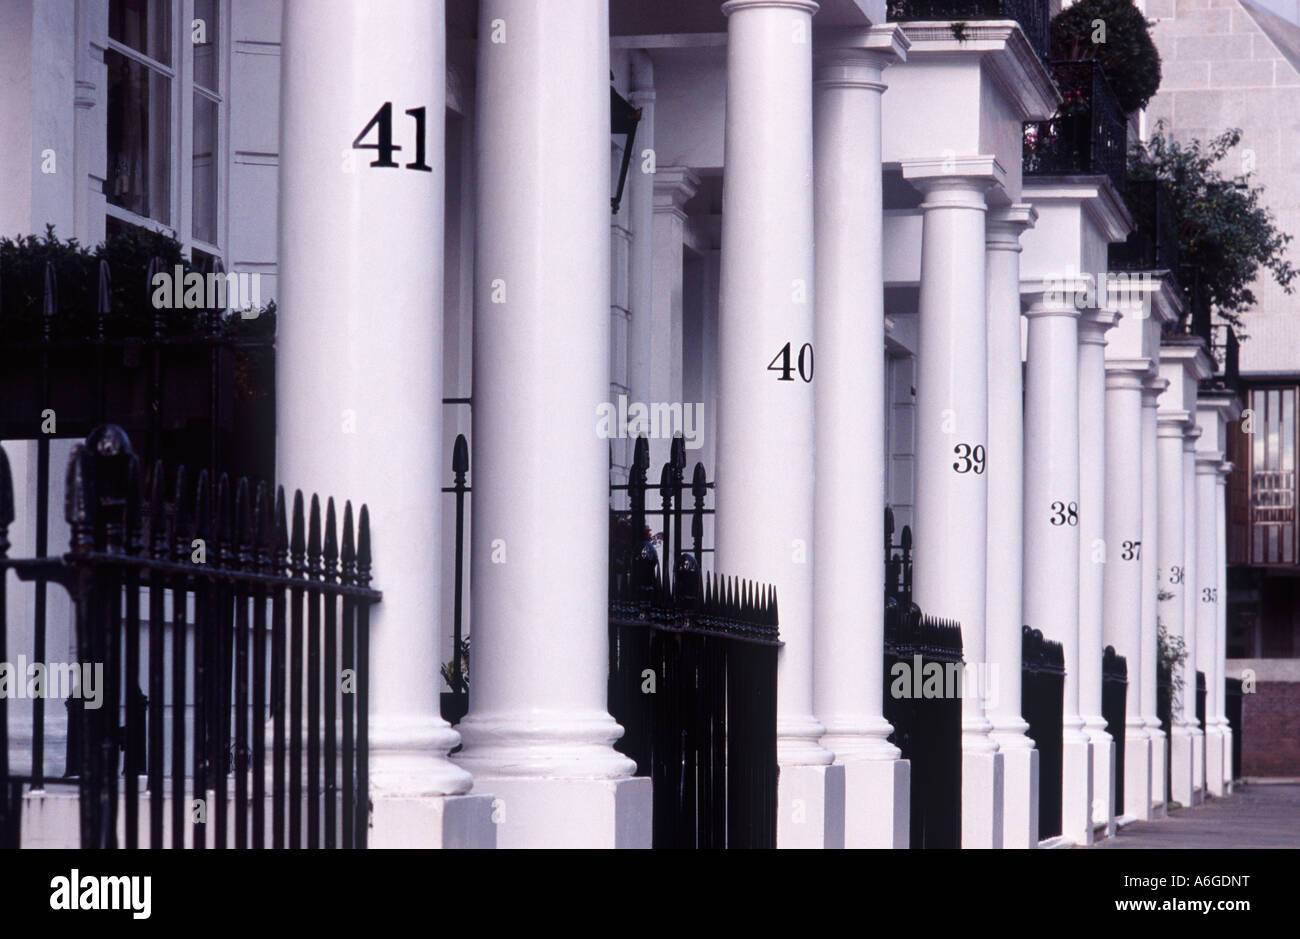 Black street address numbers on line of white columns before Regency homes, Thurloe Square, South Kensington, London SW7 England Stock Photo